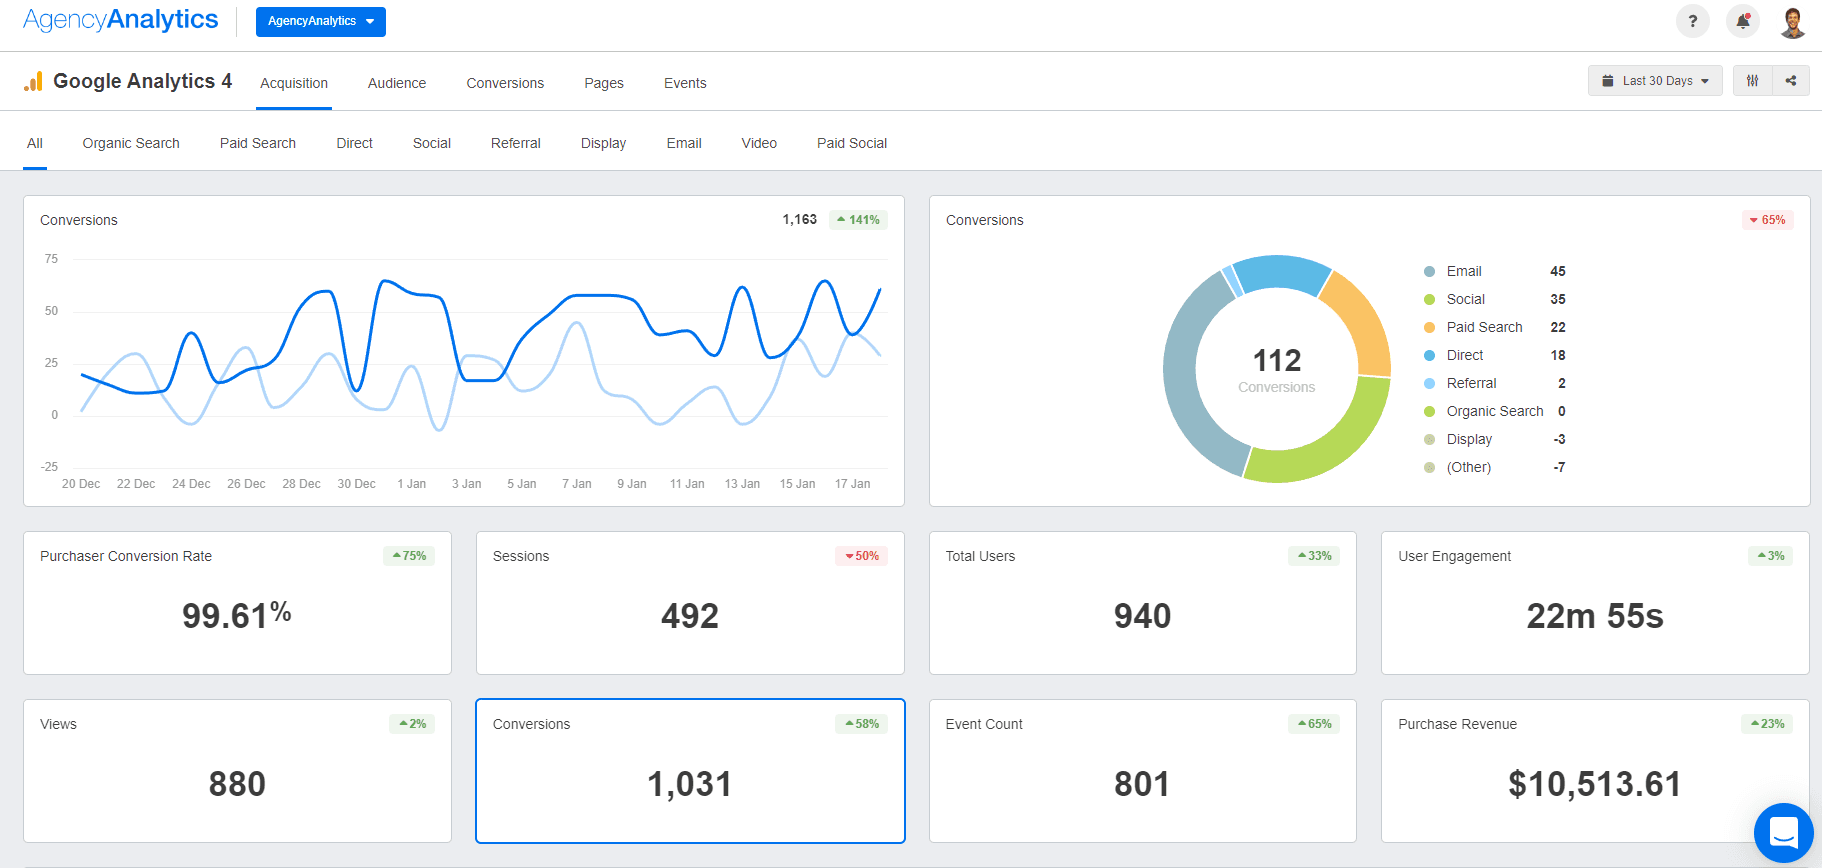 AgencyAnalytics - Google Analytics 4 Dashboard